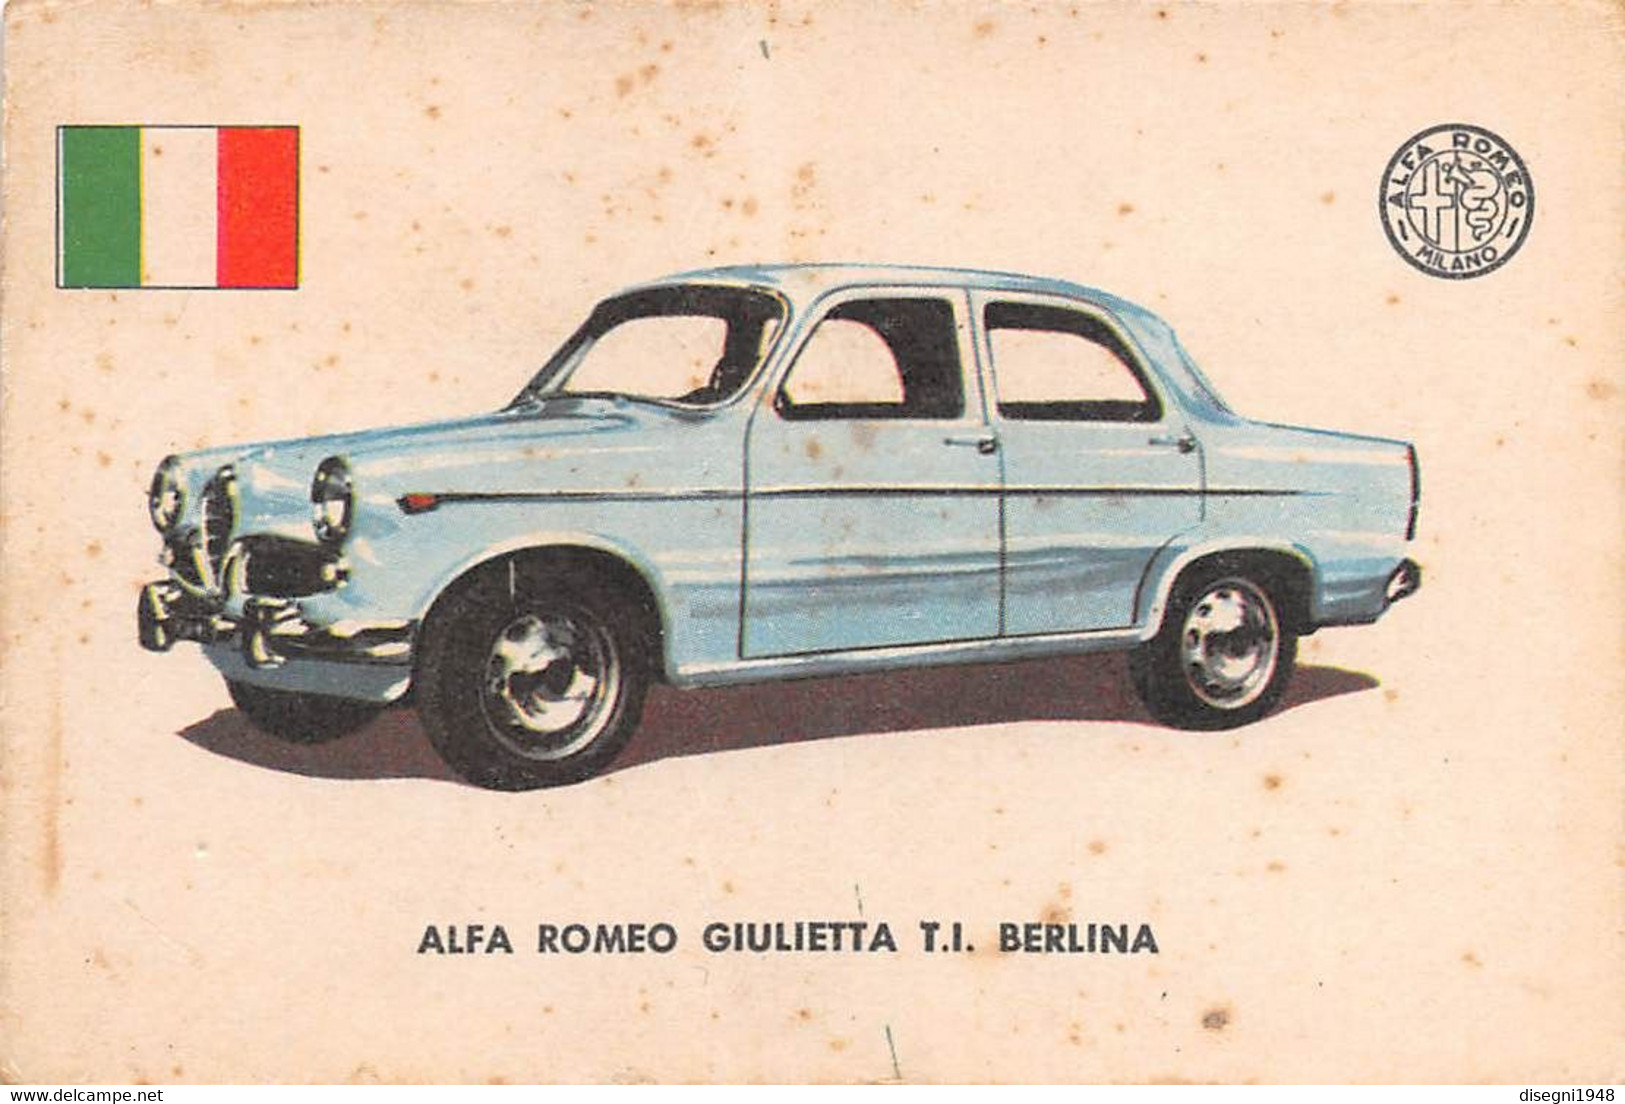 11916 "ALFA ROMEO GIULIETTA T.I. BERLINA 2 - AUTO INTERNATIONAL PARADE - SIDAM TORINO - 1961" FIGURINA CARTONATA ORIG. - Auto & Verkehr